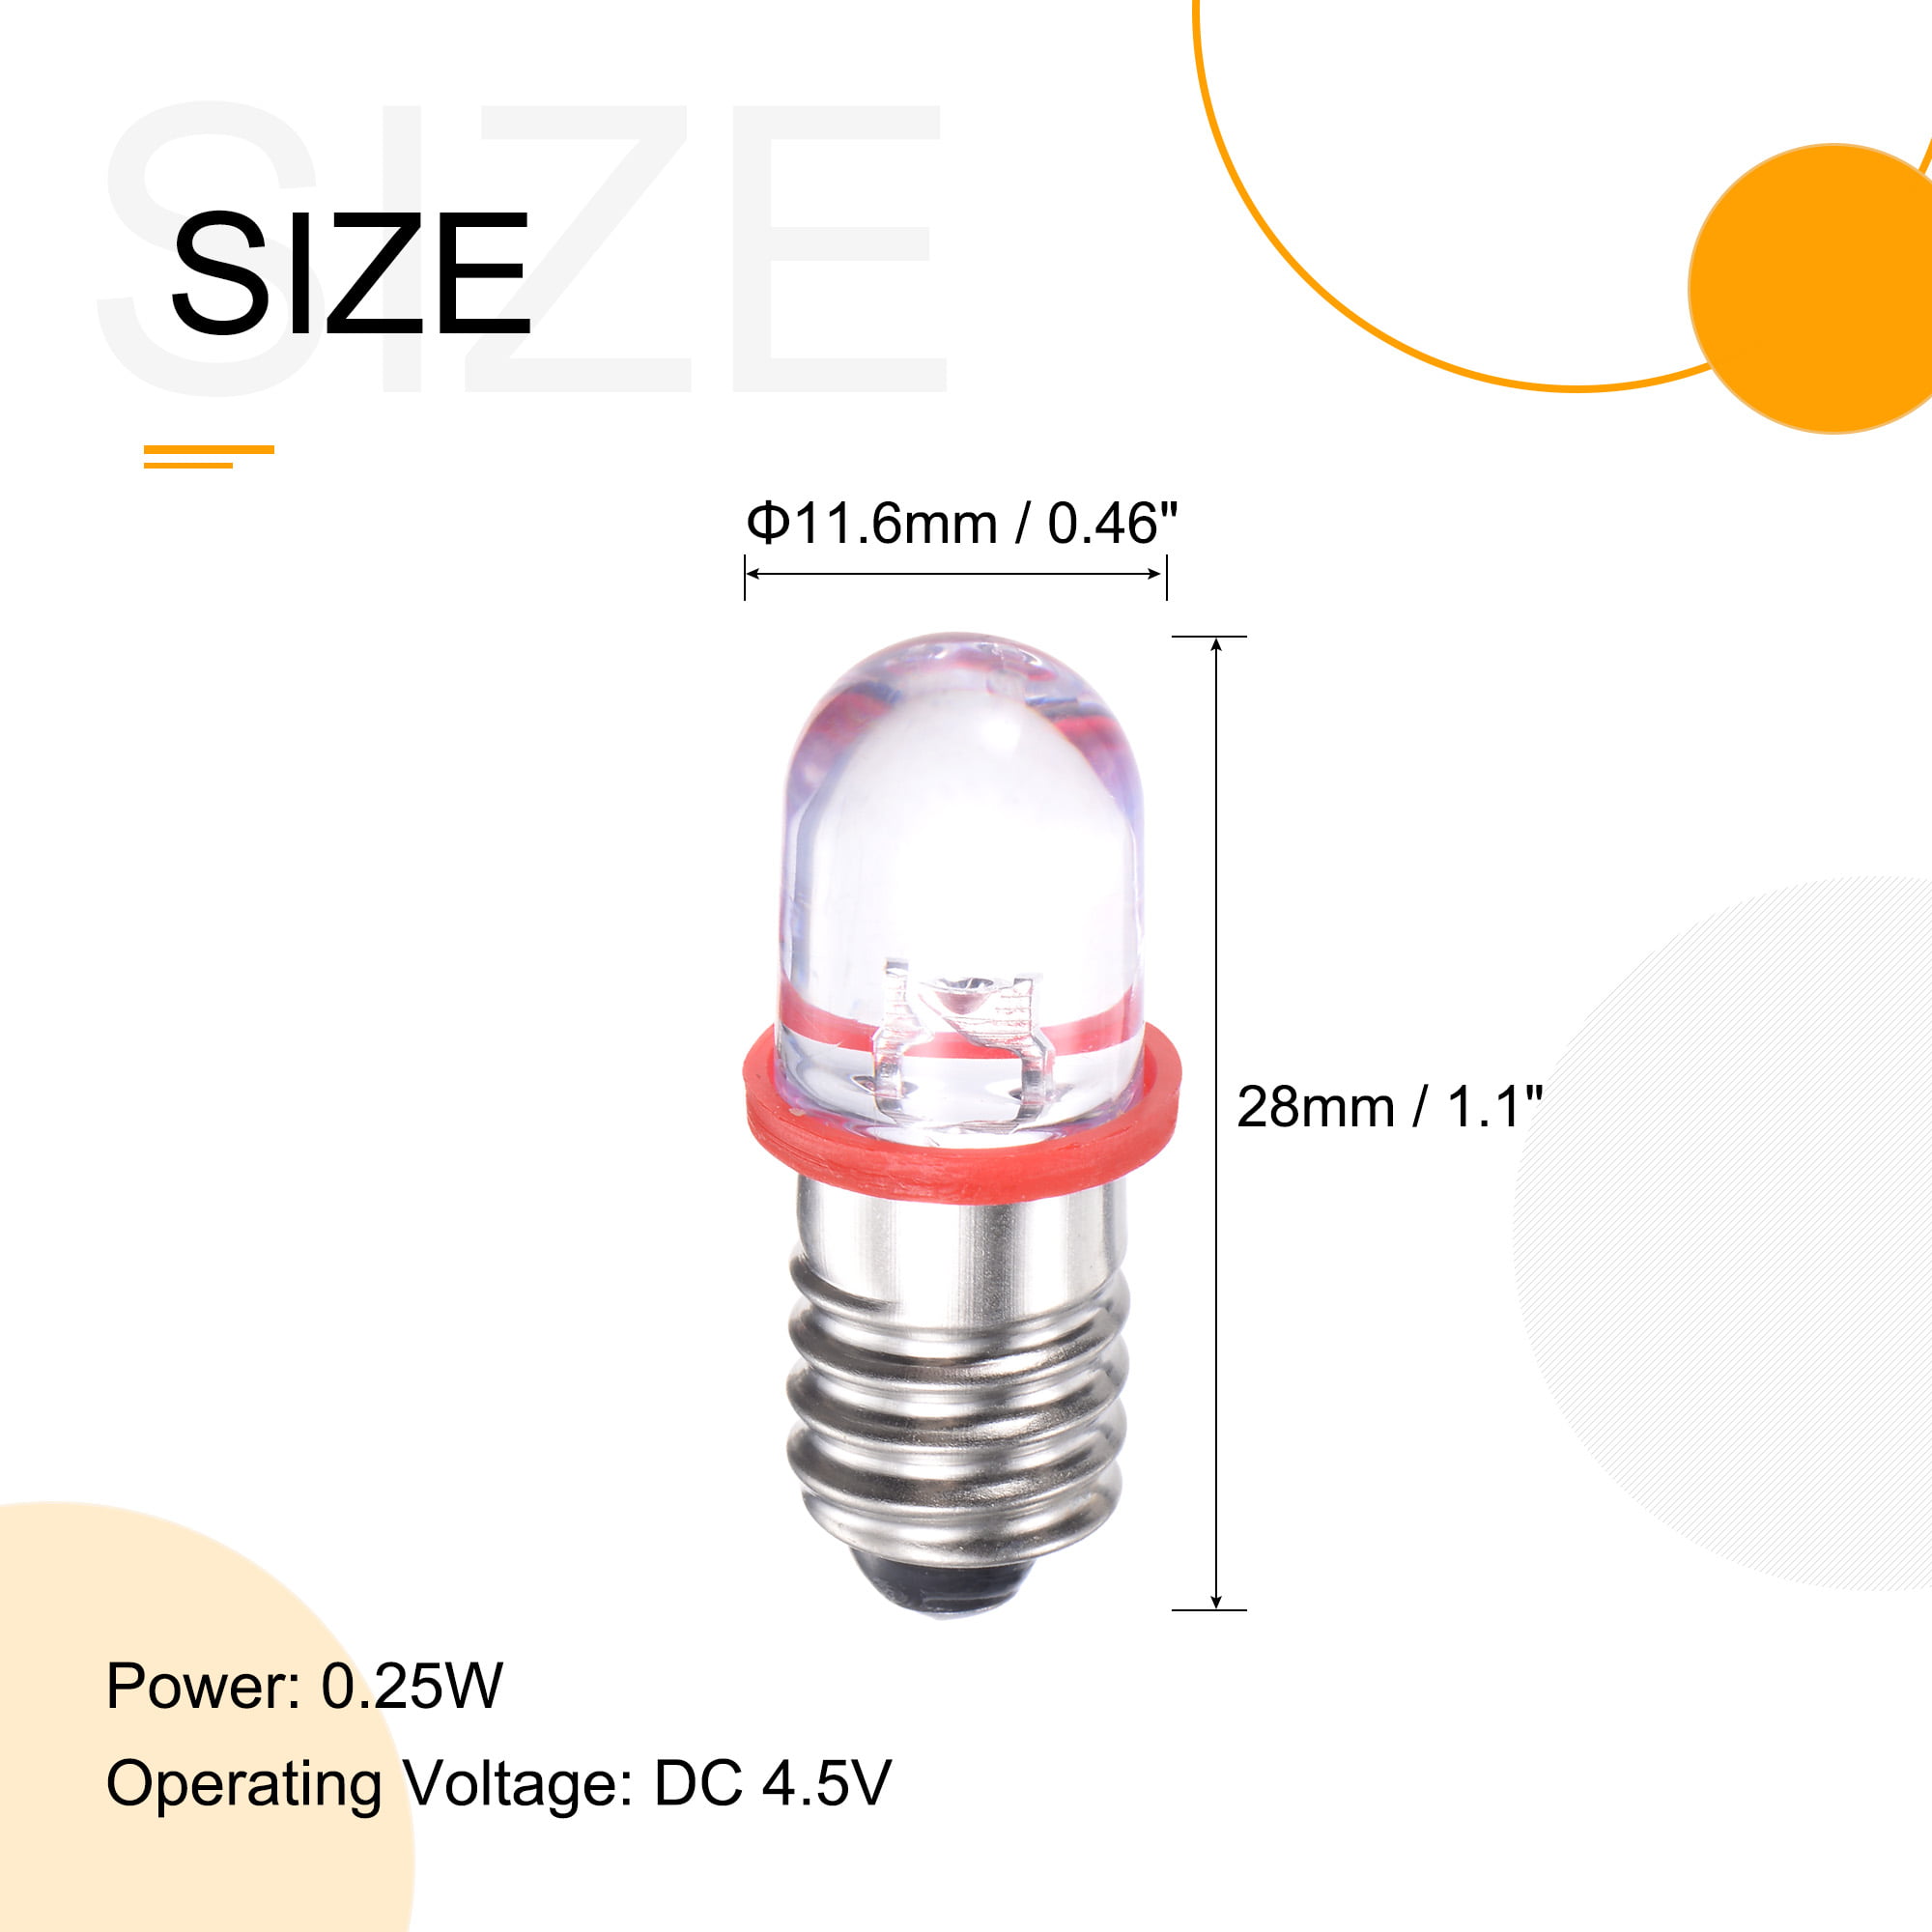 E10 LED Miniature Screw 5 SMD 12 To 16 Volt AC Or DC Non Polarity